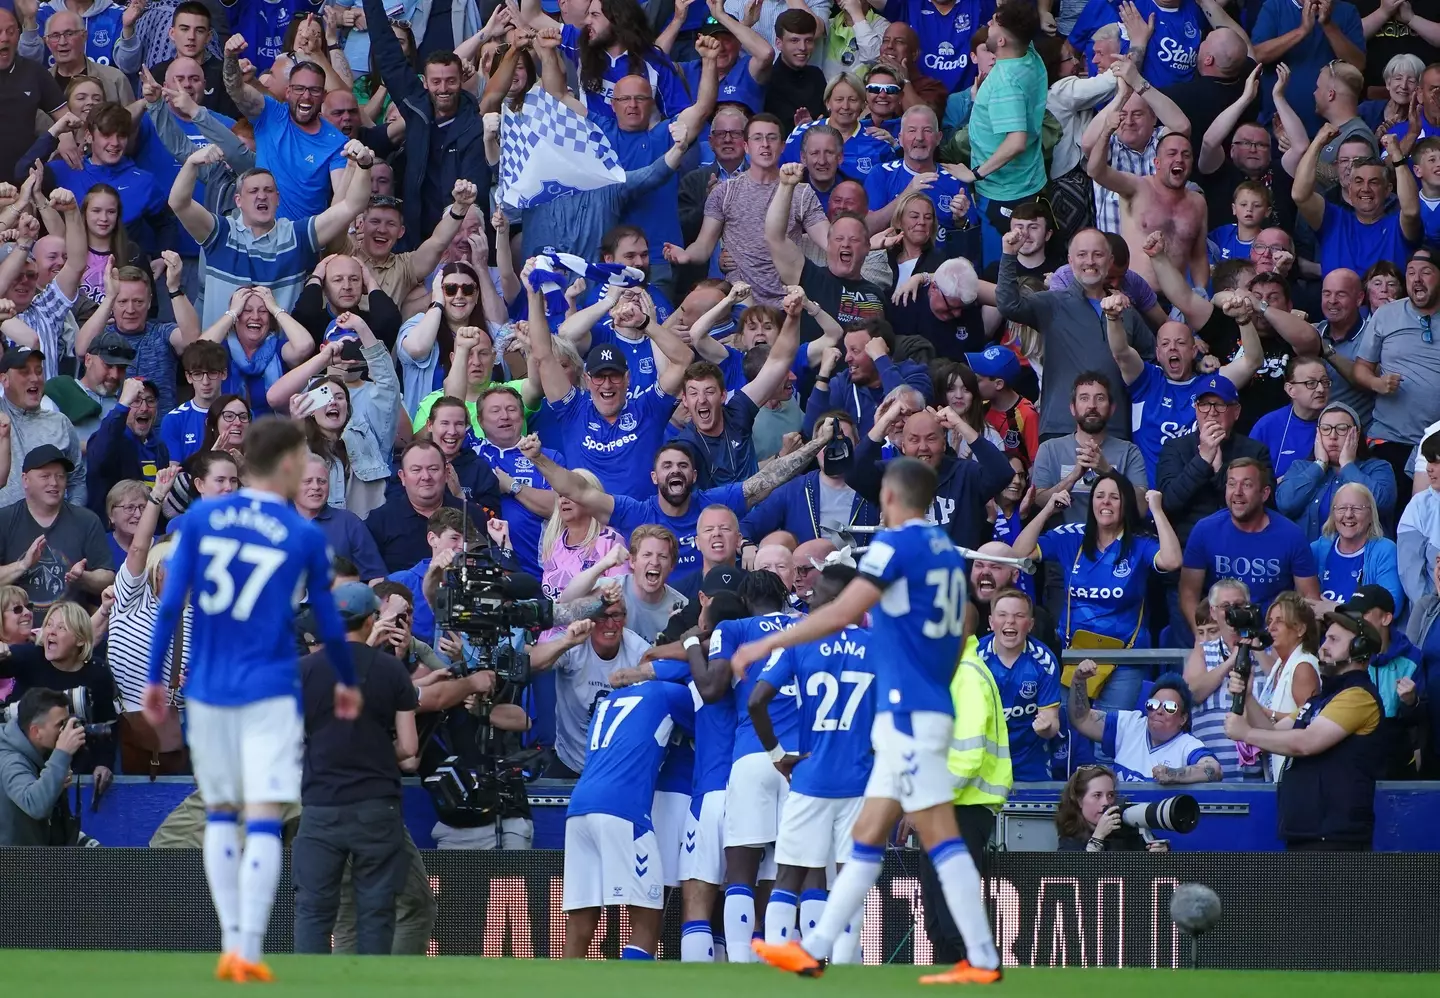 Everton fans celebrate after Doucoure's goal. Image: Alamy